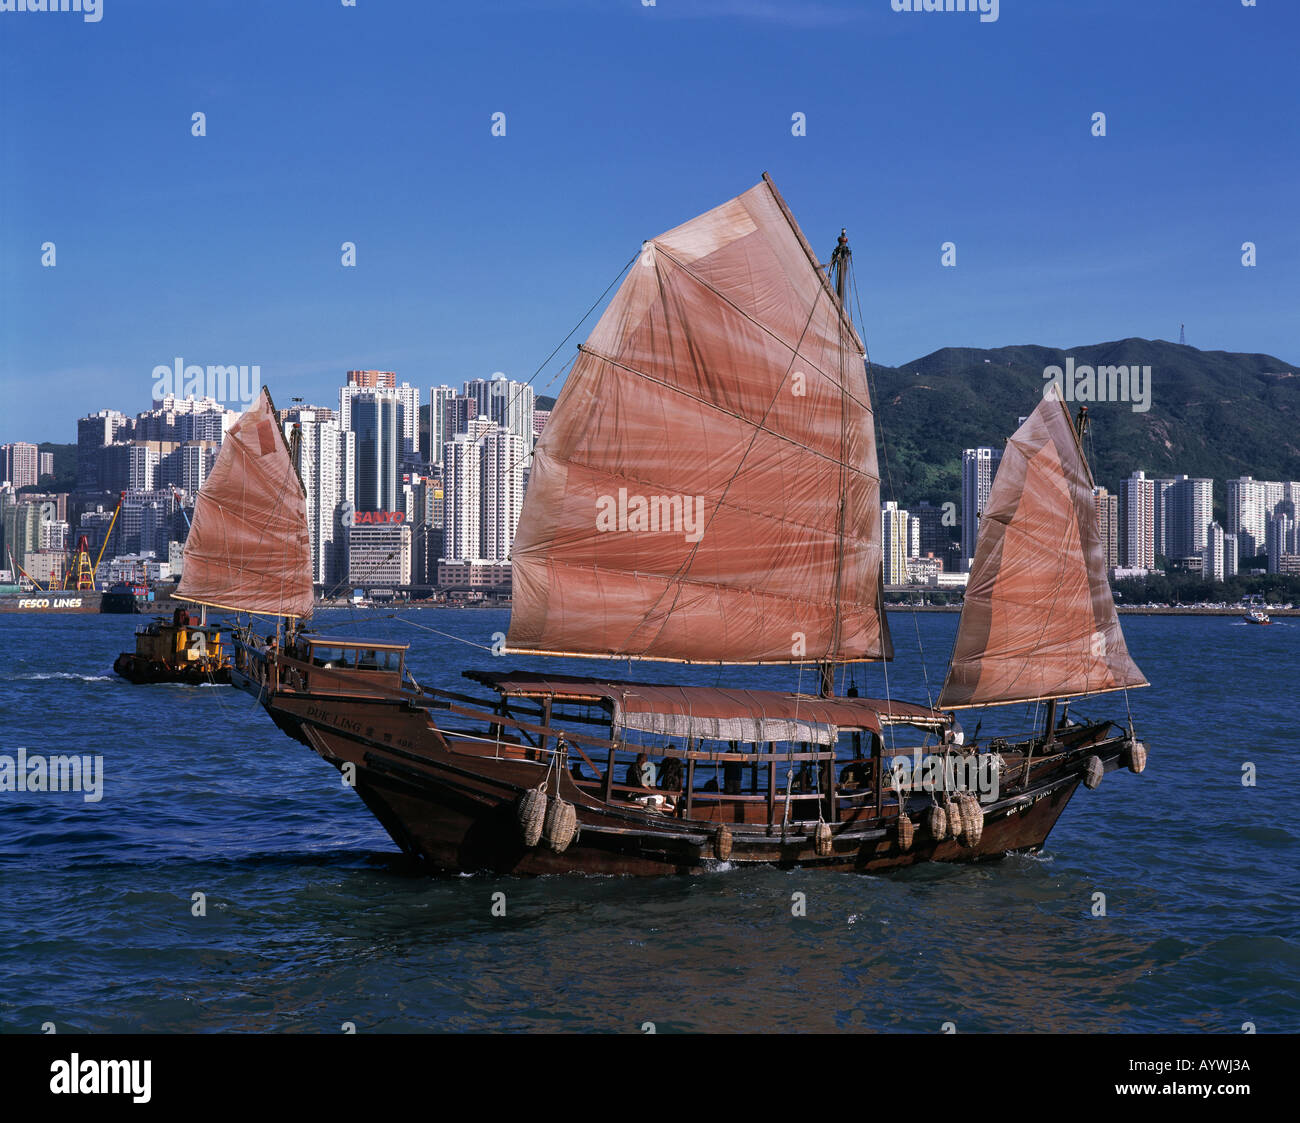 Hafen, Dschunke, Segelschiff, Wolkenkratzer-Skyline, Hong Kong Insel